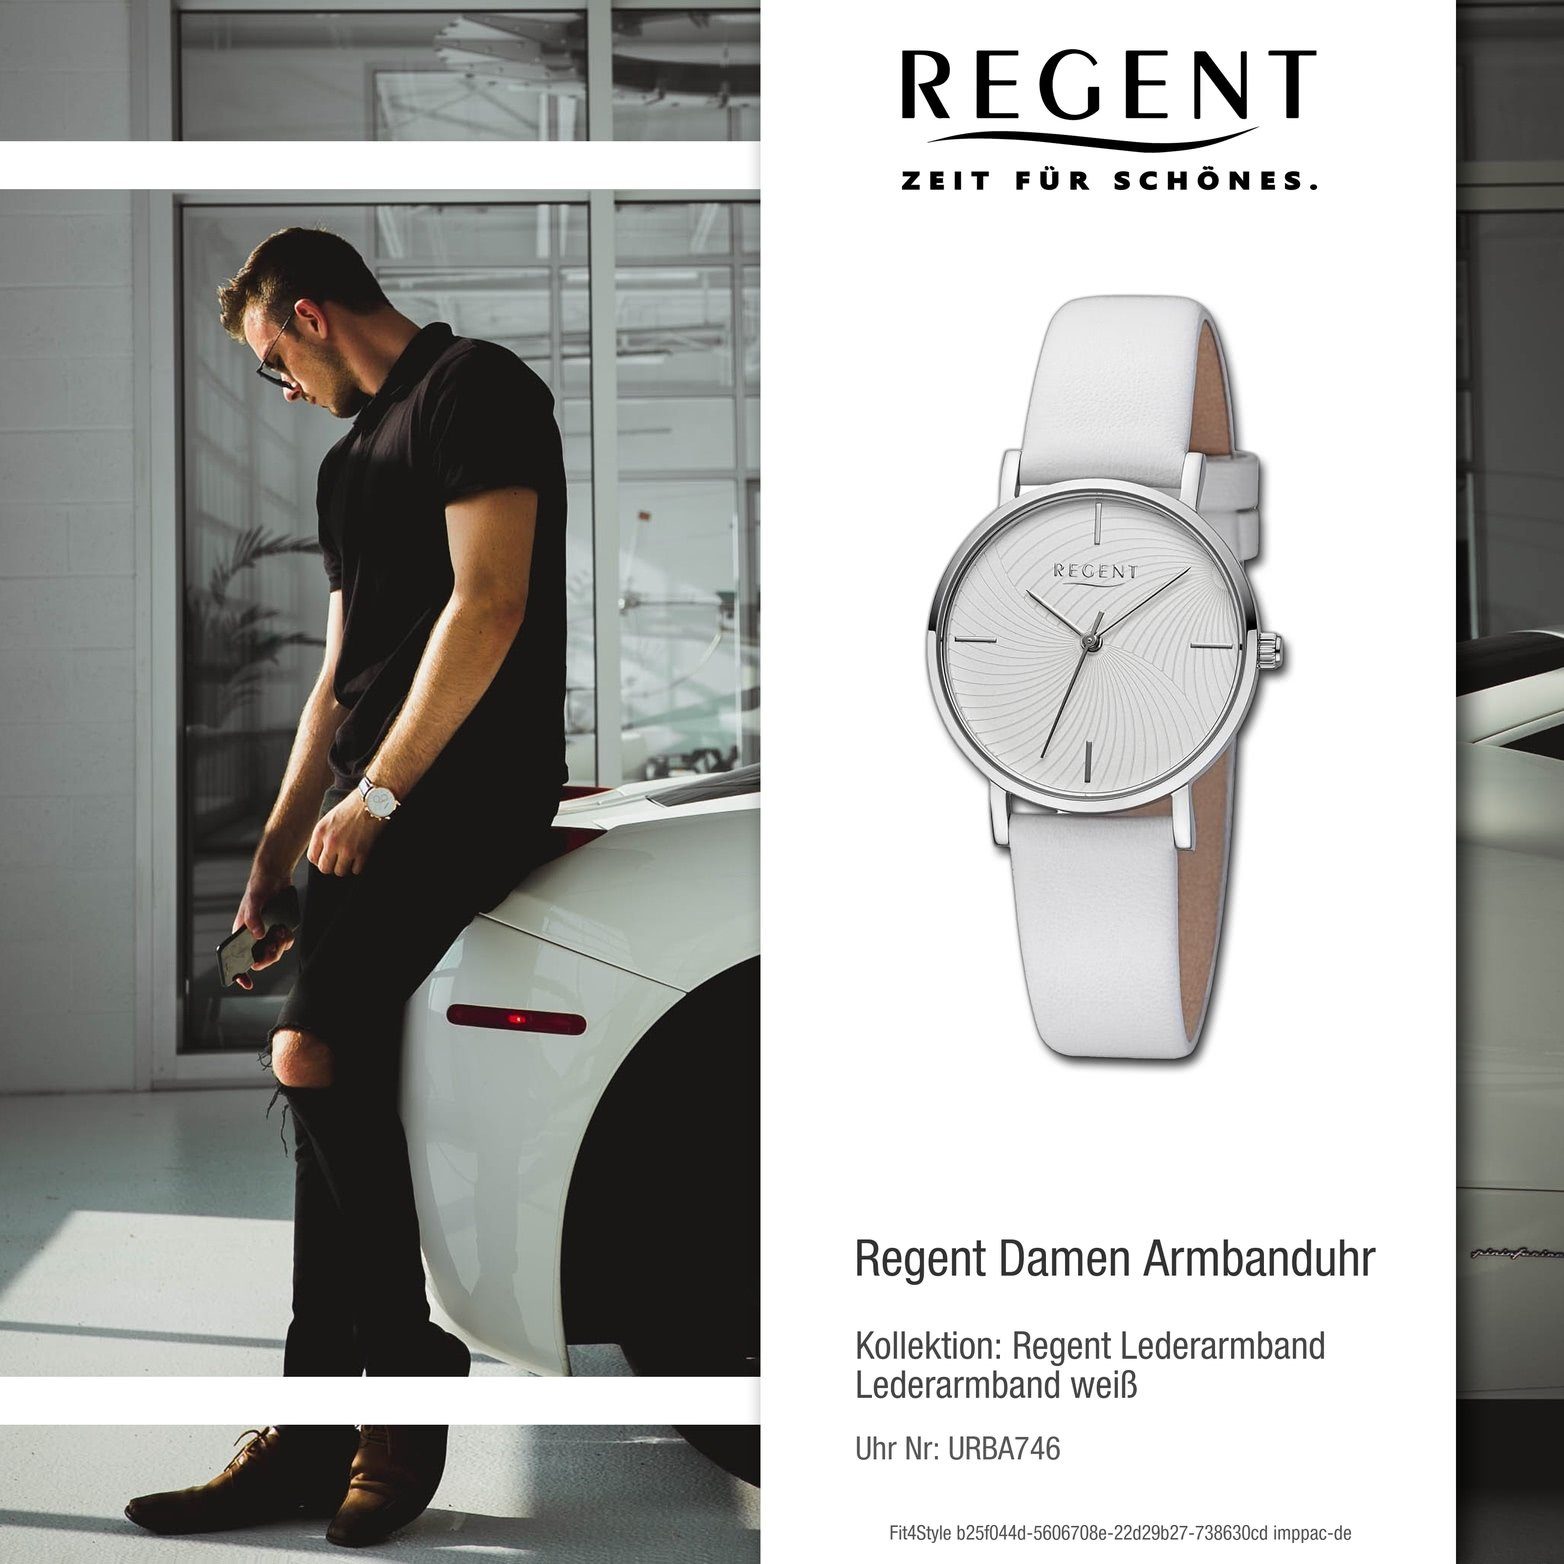 Analog, rundes Regent (ca. groß Armbanduhr 32mm) Gehäuse, Damenuhr Damen weiß, extra Quarzuhr Lederarmband Regent